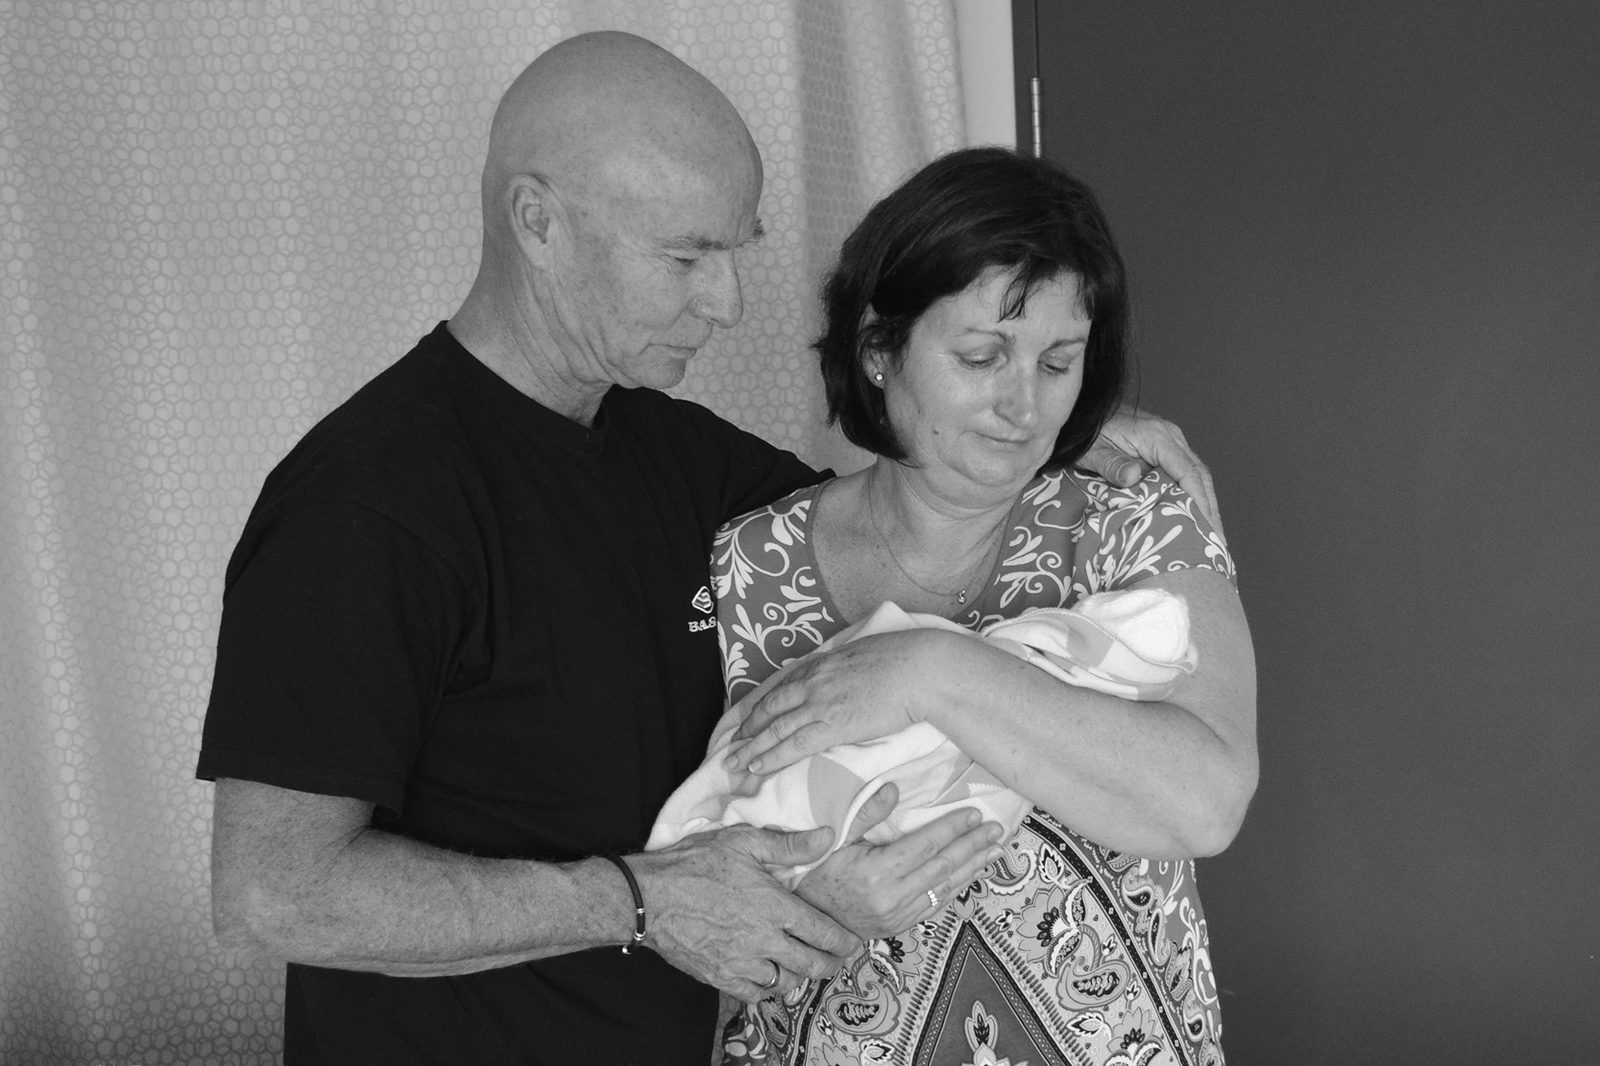 Bill and Tracey Gordin cuddling baby Addison